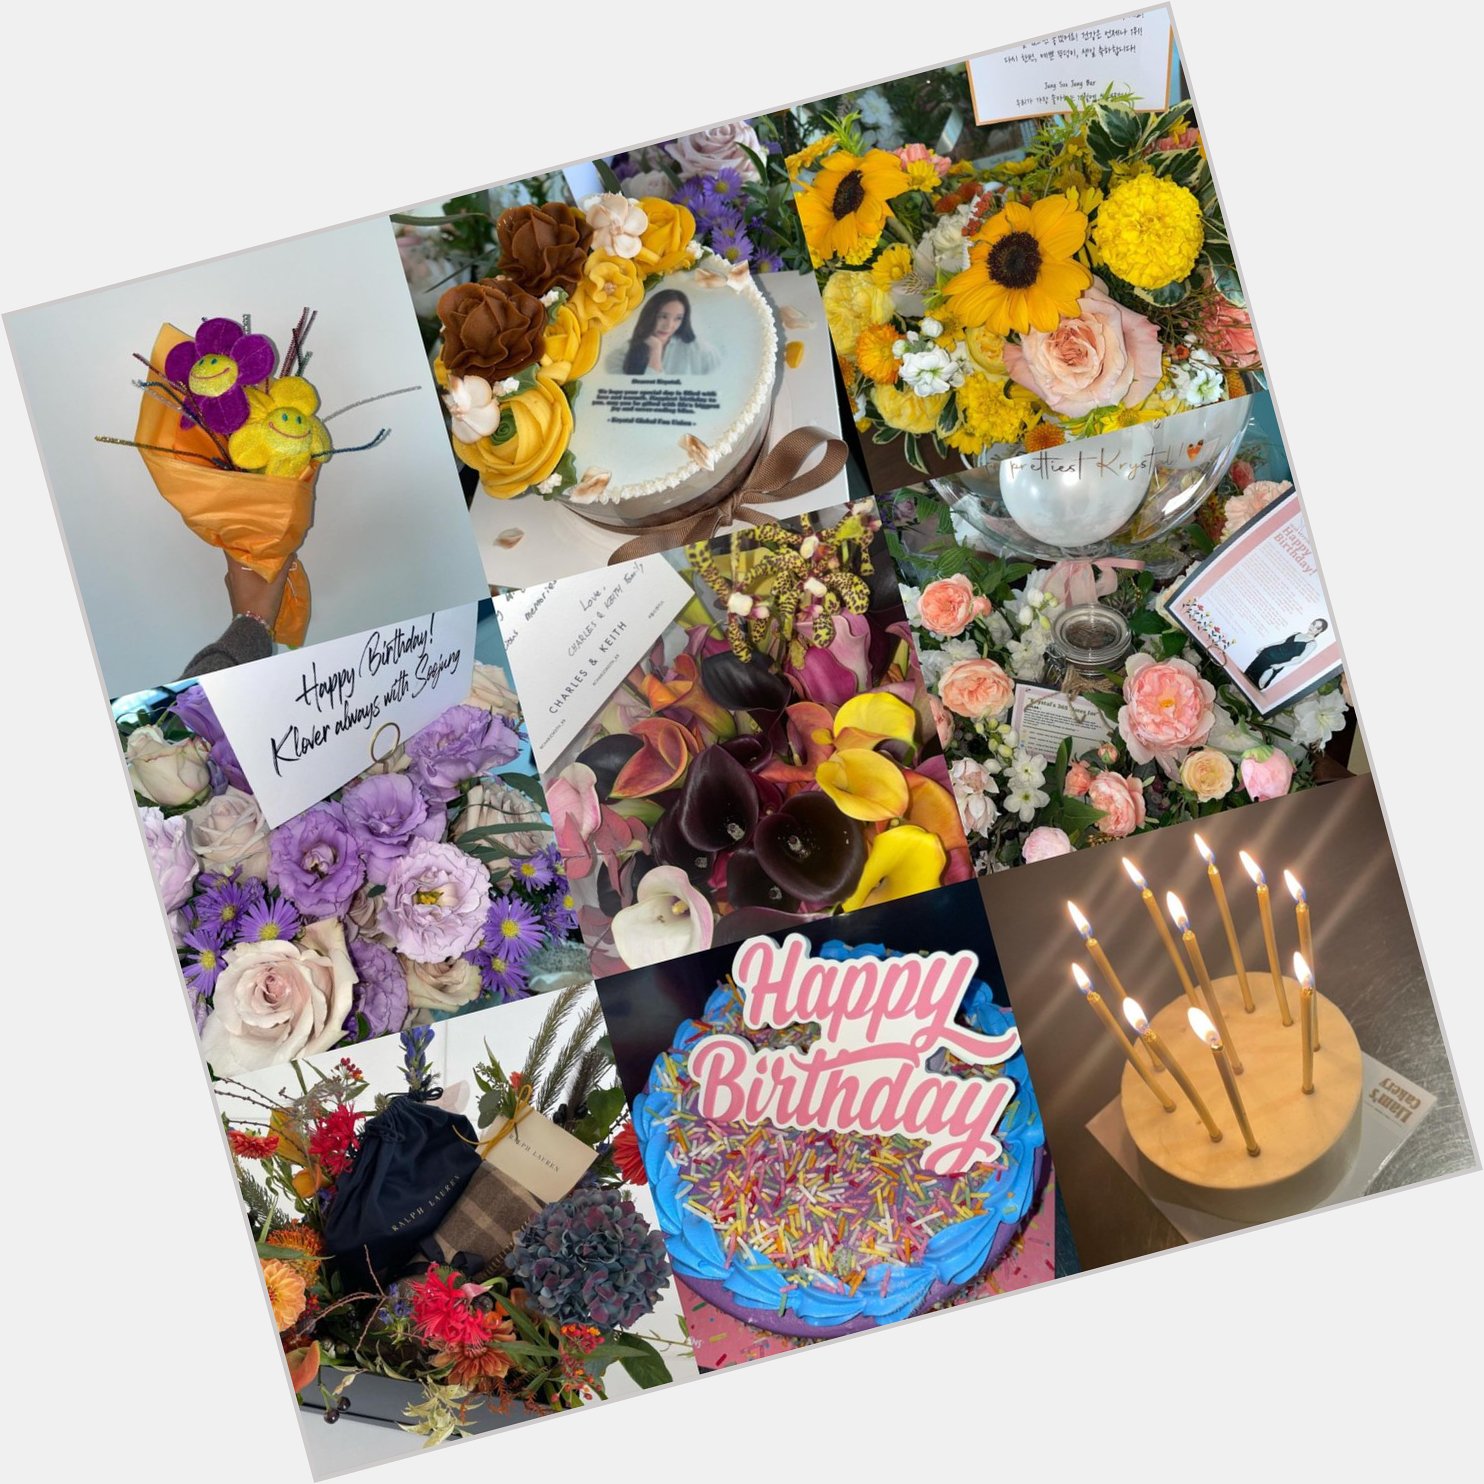 Krystal jung cake, hand, and flower update  HAPPY BIRTHDAY LAGI SYGKUUUU   